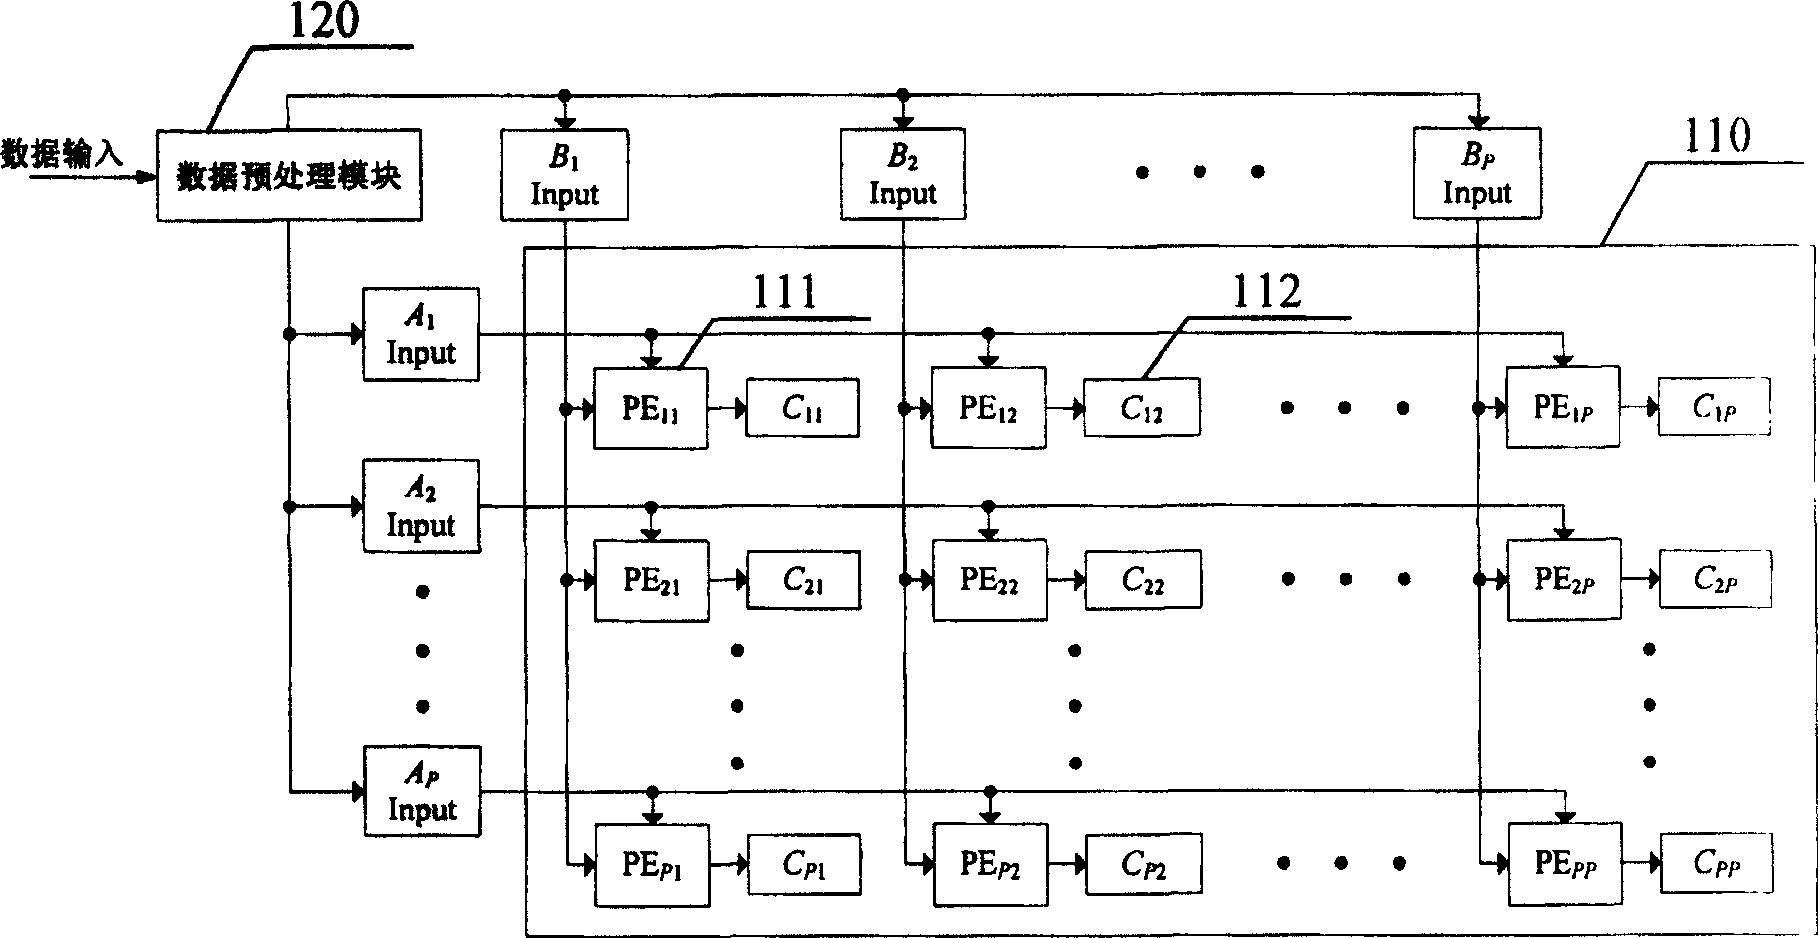 Matrix multiplier device based on single FPGA